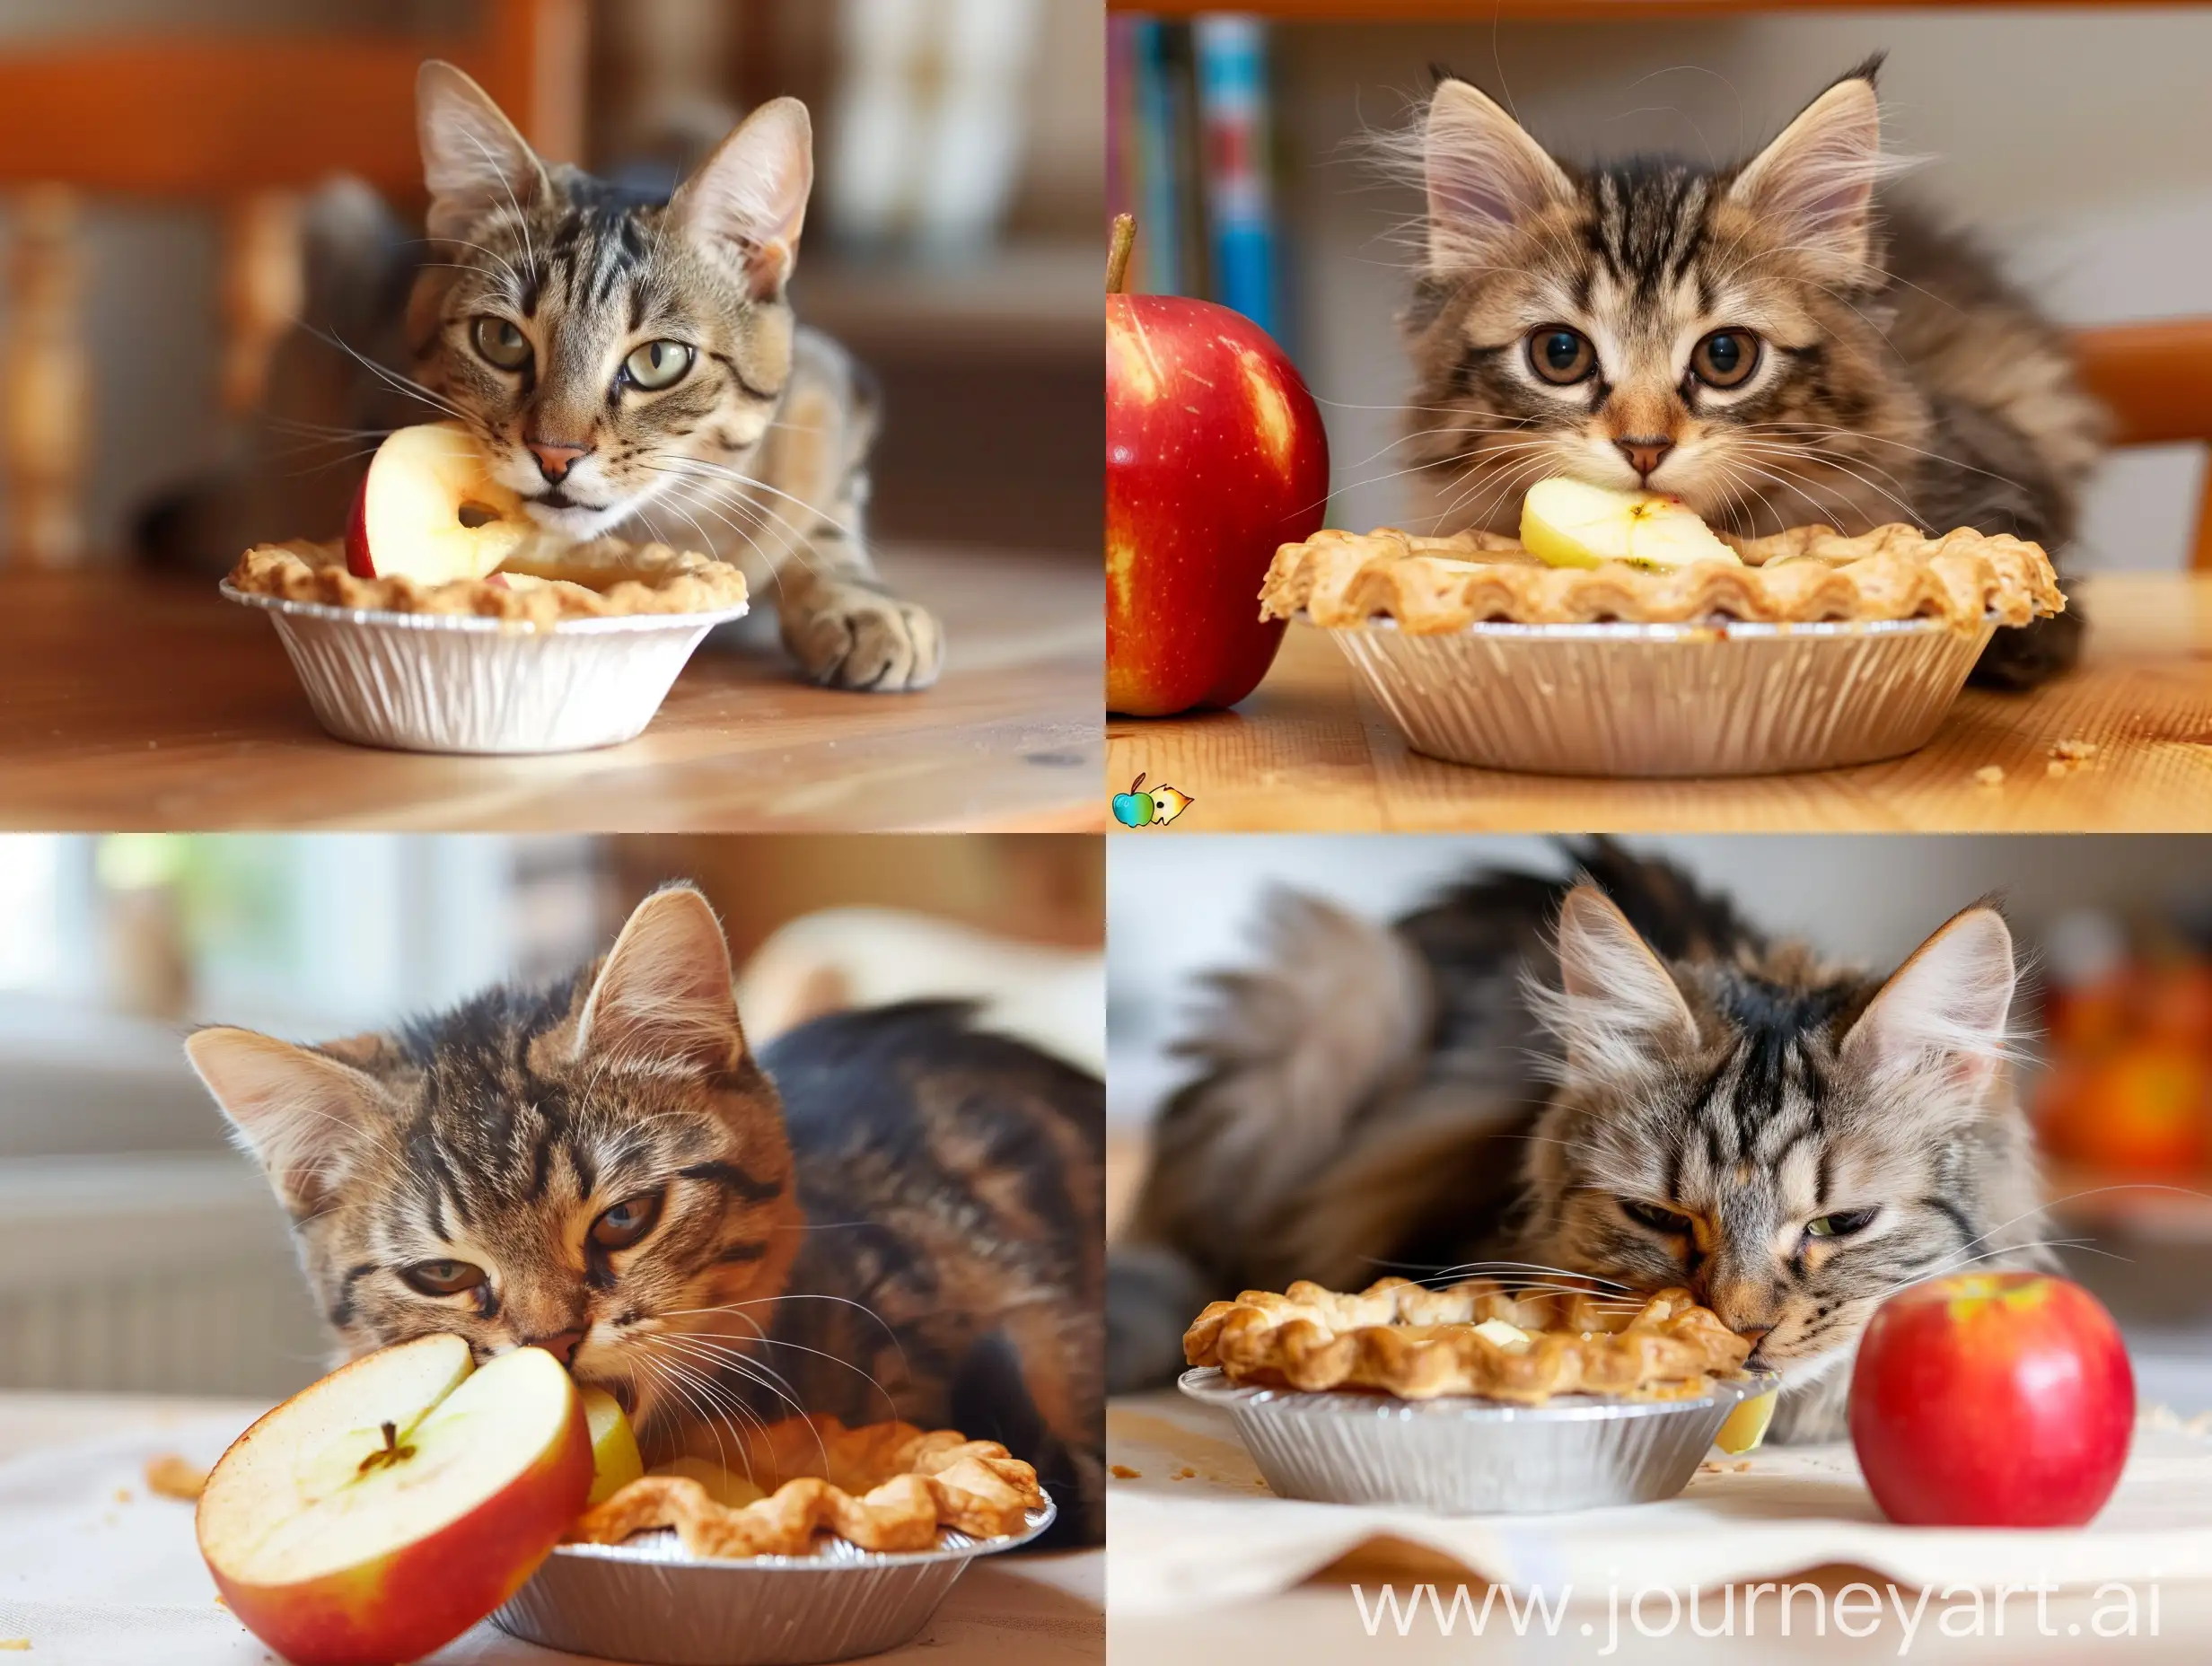 a cute cat eating a cute apple pie